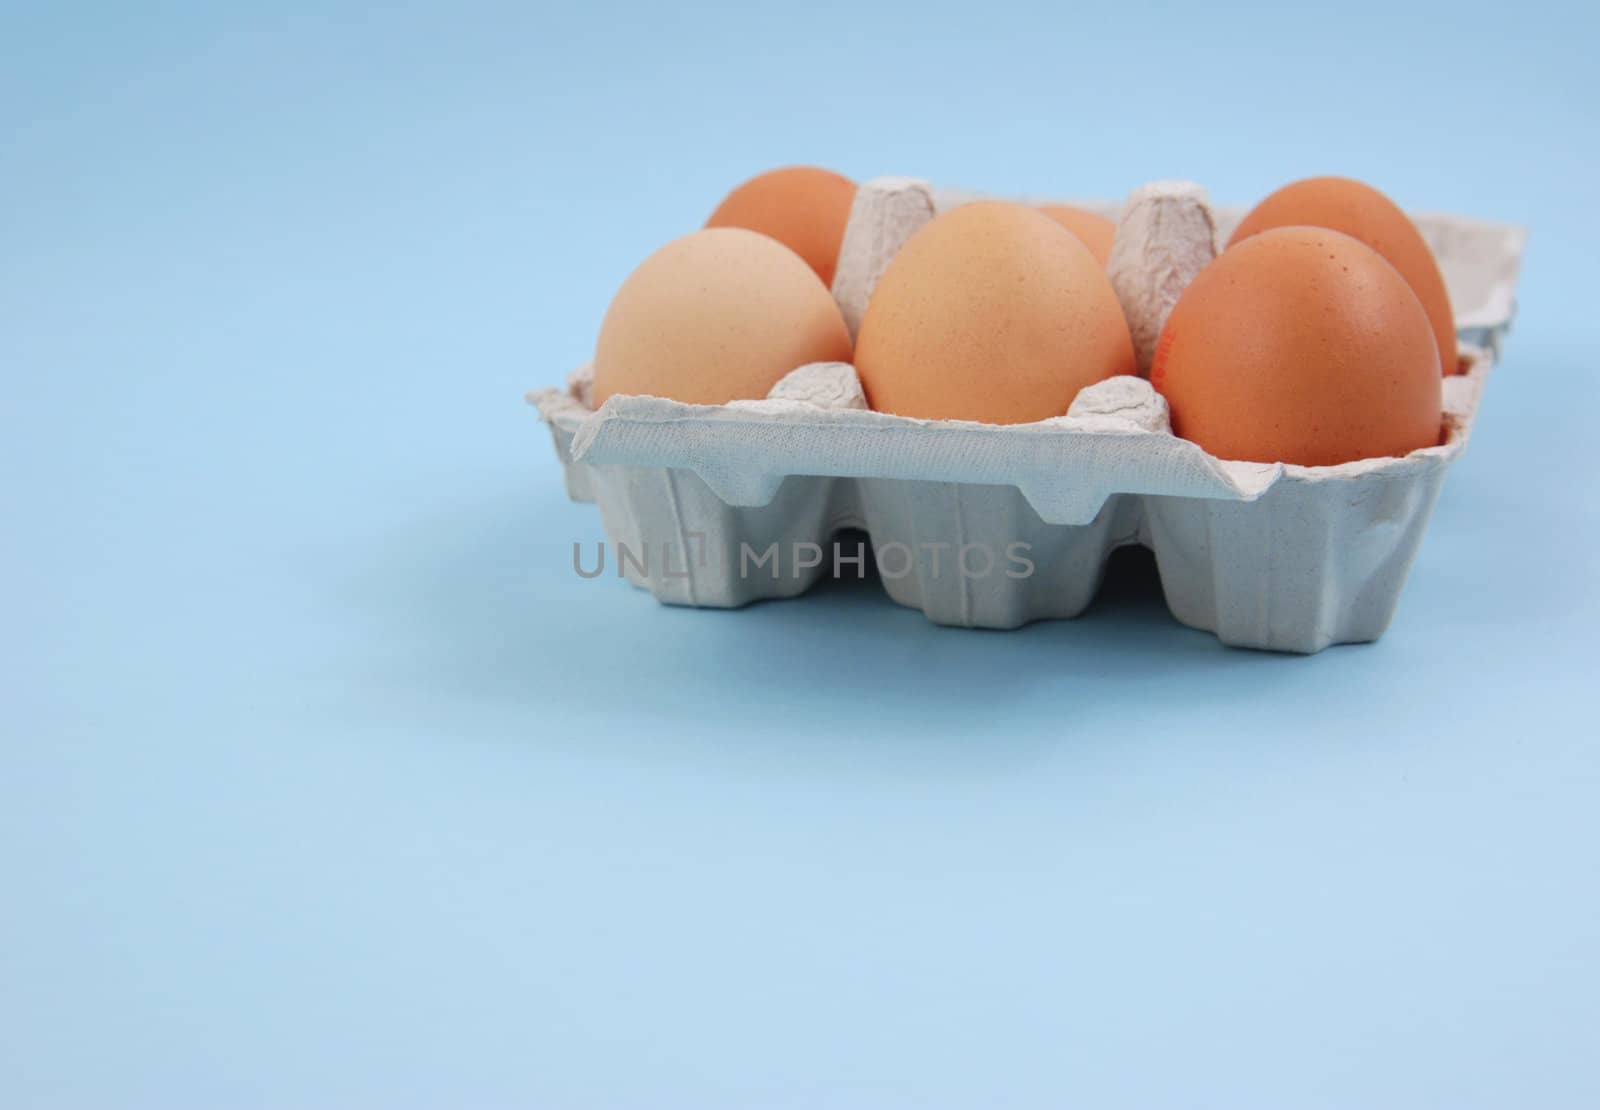 Half Dozen Eggs in Carton
eggs on blue background